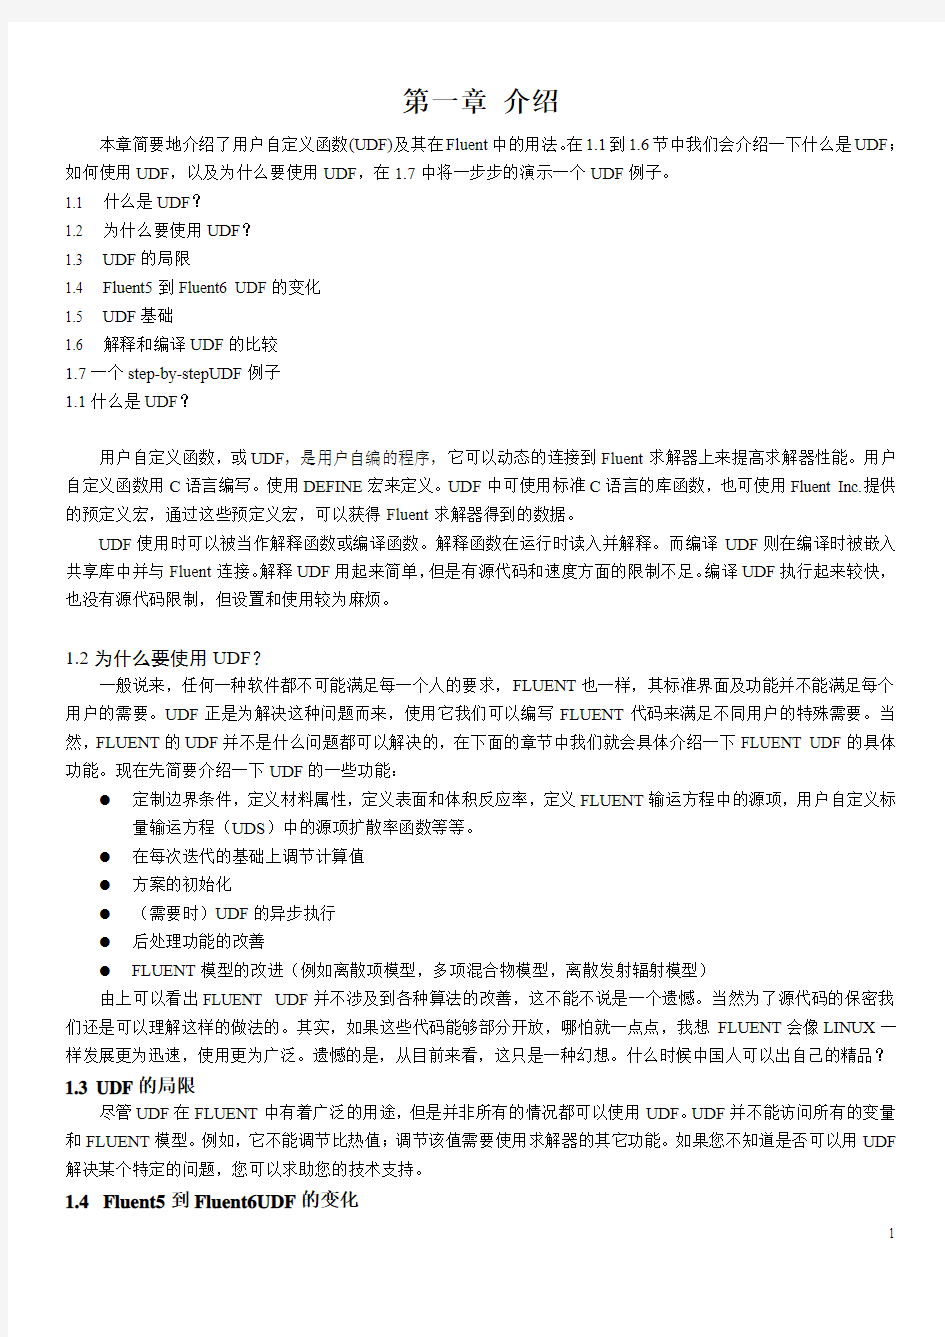 Fluent UDF 中文教程1